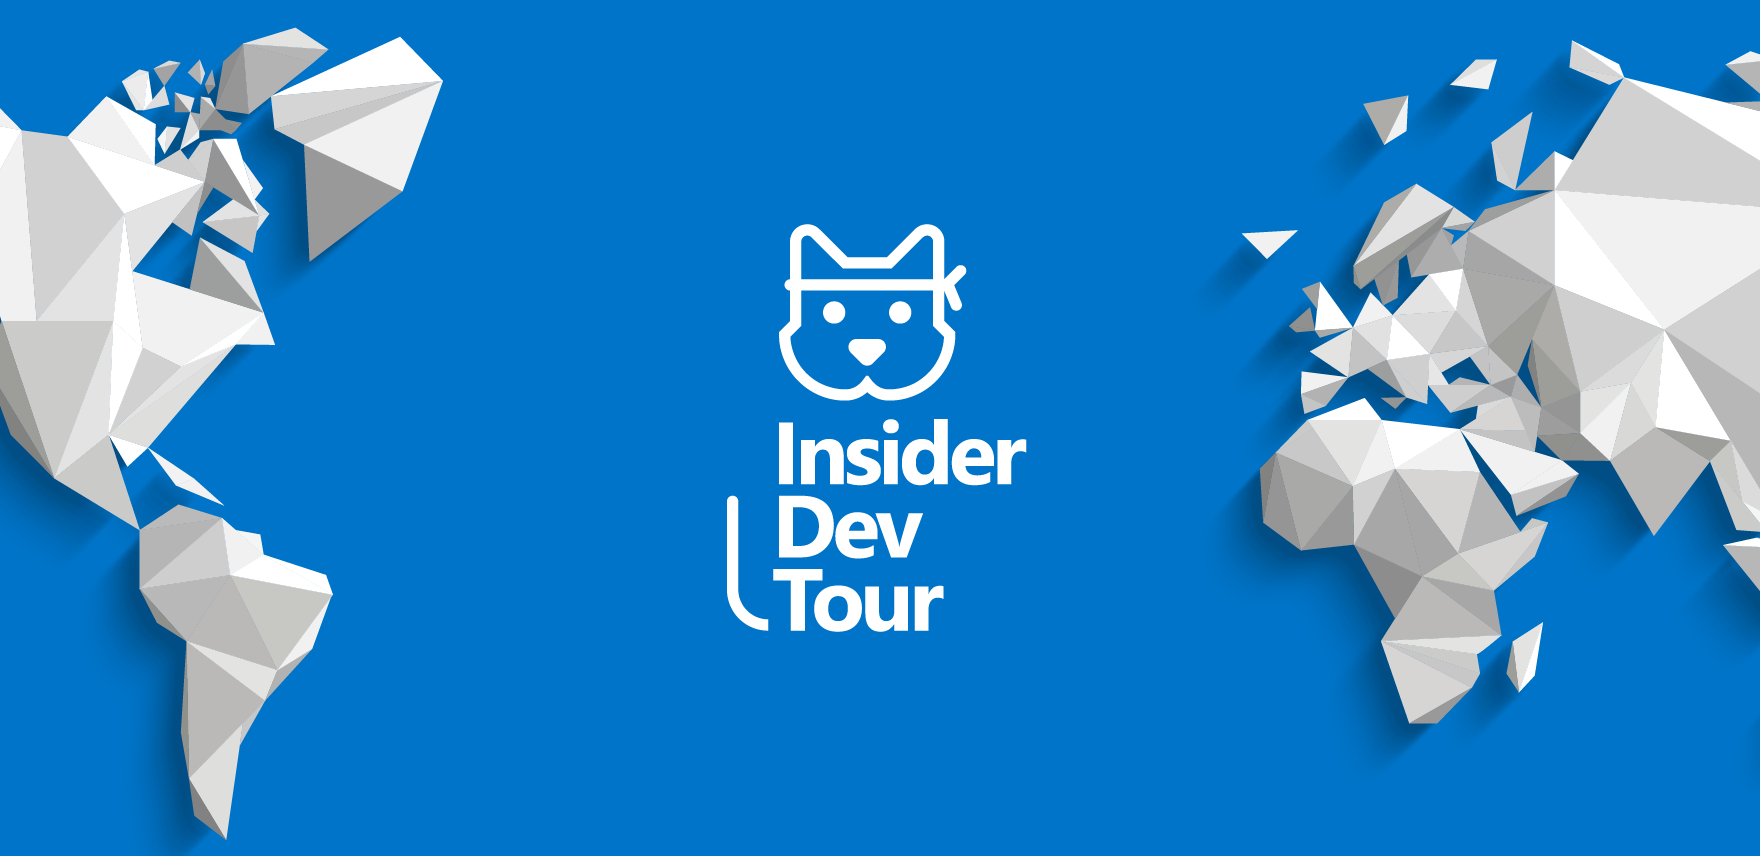 Announcing the Insider Dev Tour 2019!